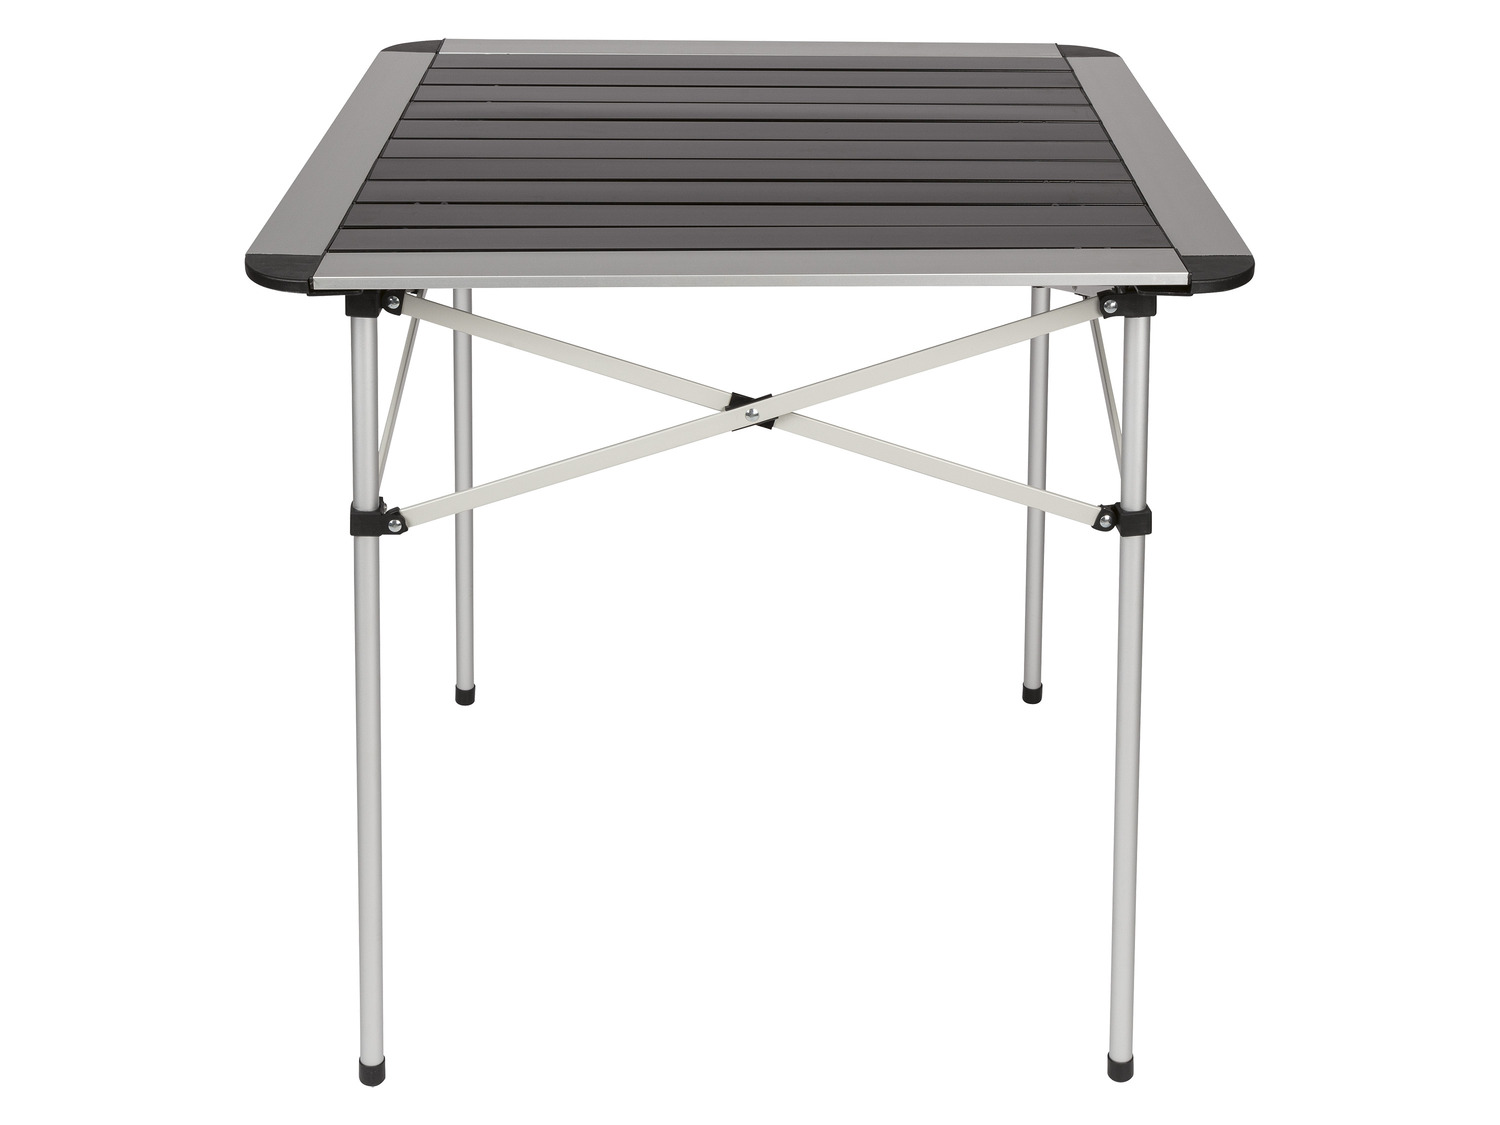 Gelach Woning pepermunt Rocktrail Aluminium campingtafel online kopen | LIDL